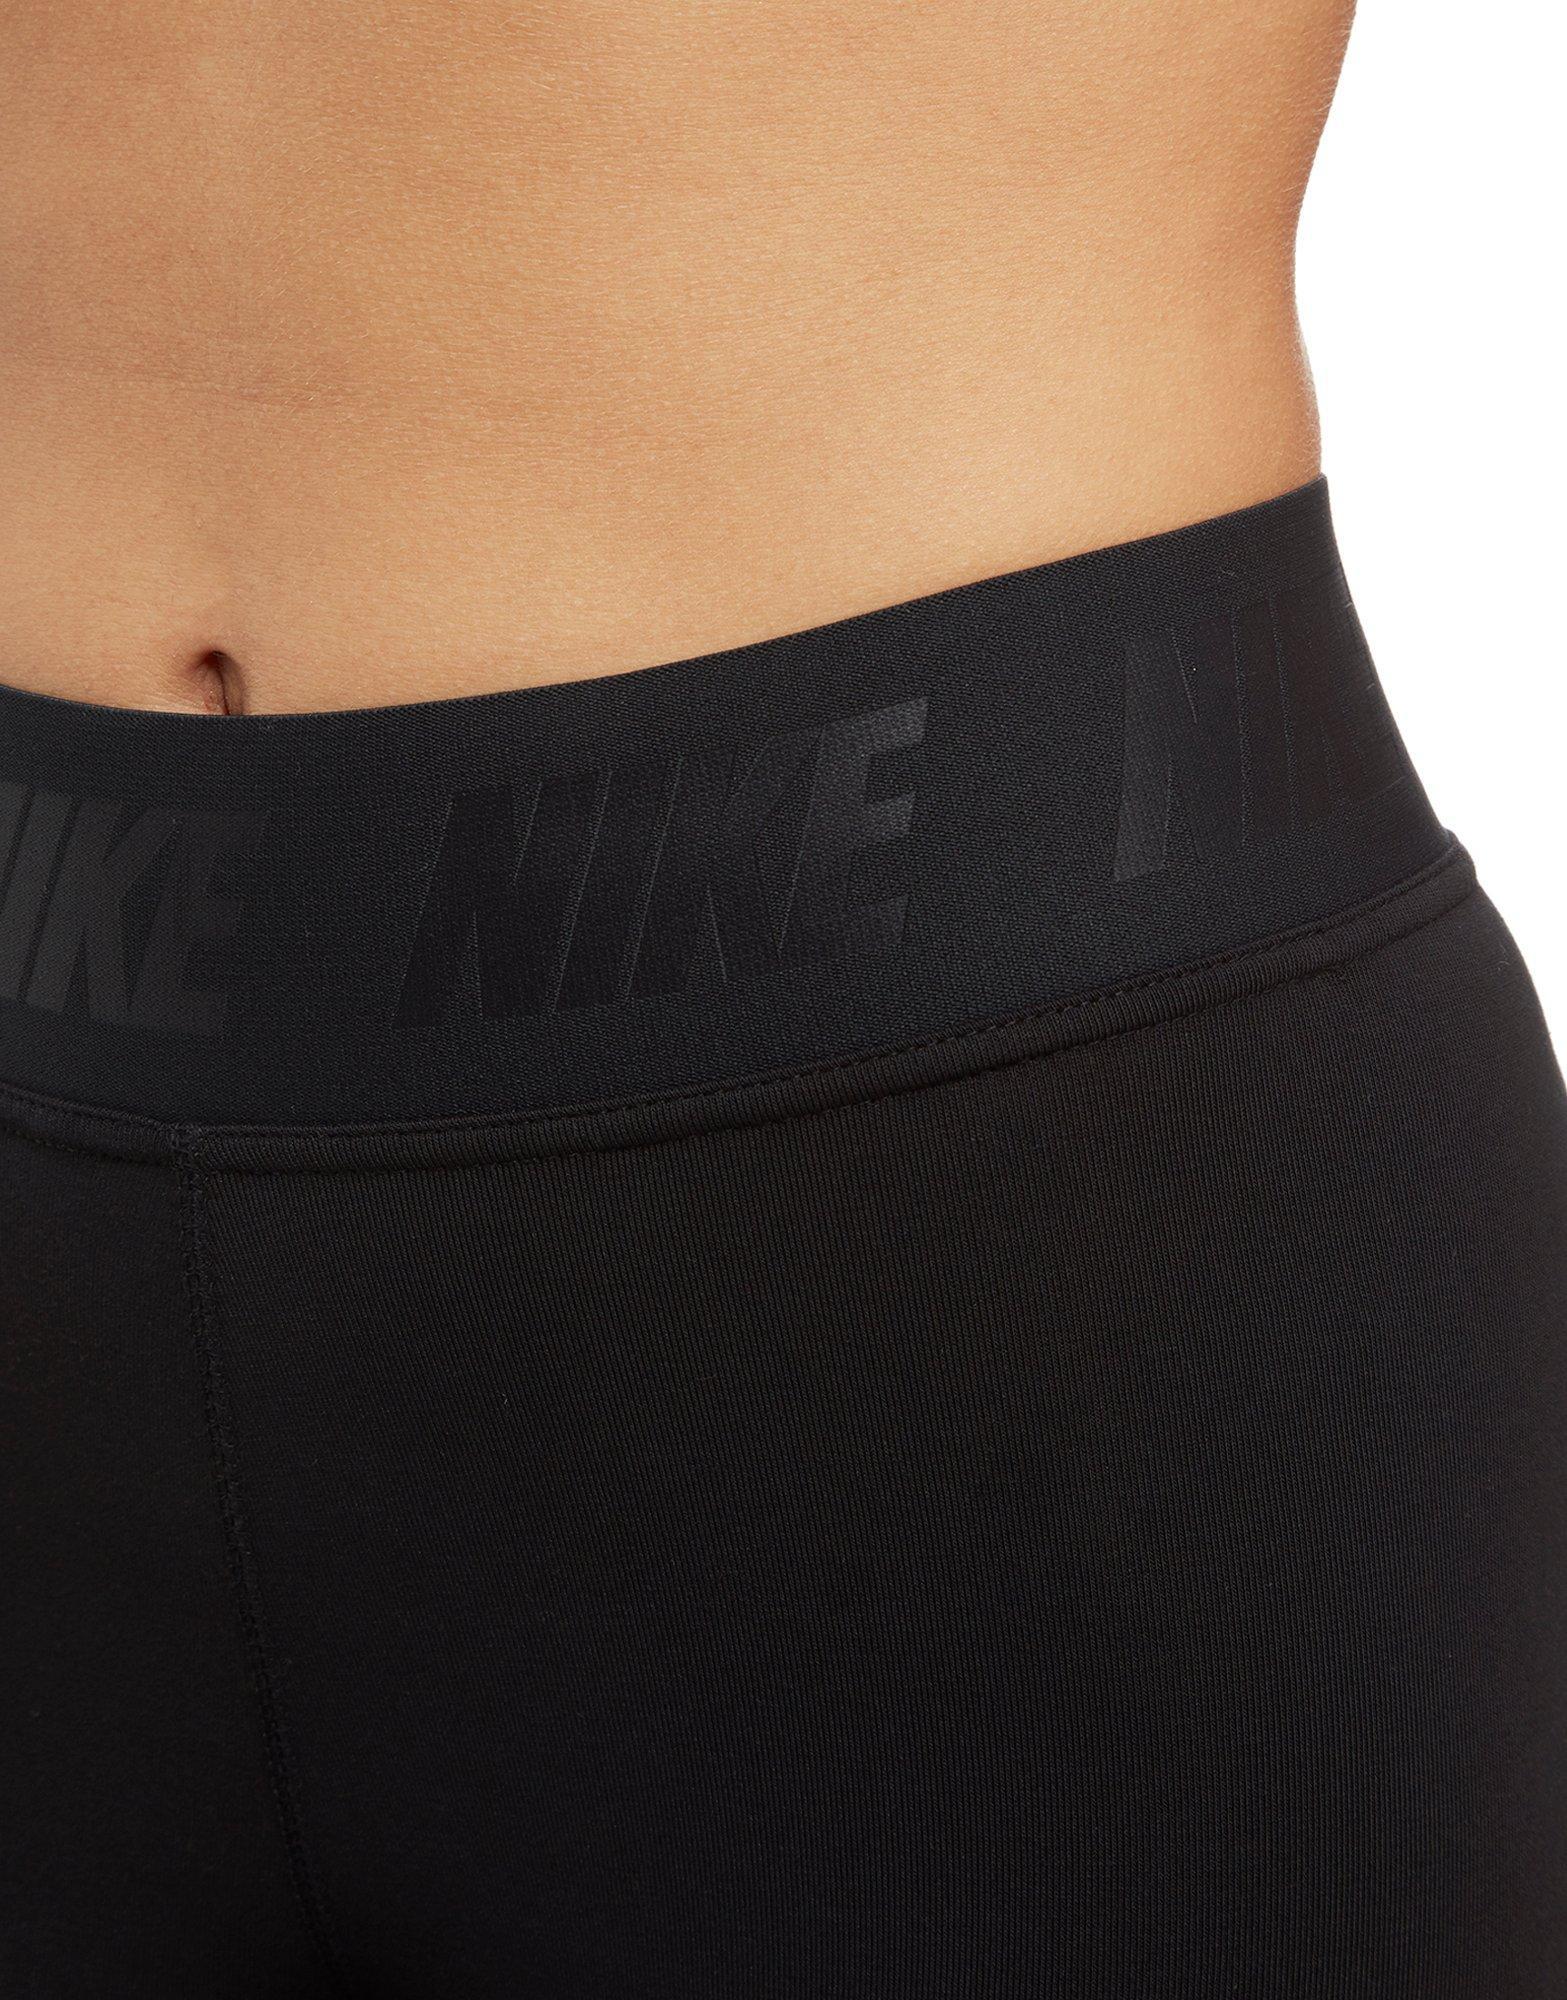 Lyst - Nike High Waisted Leggings in Black